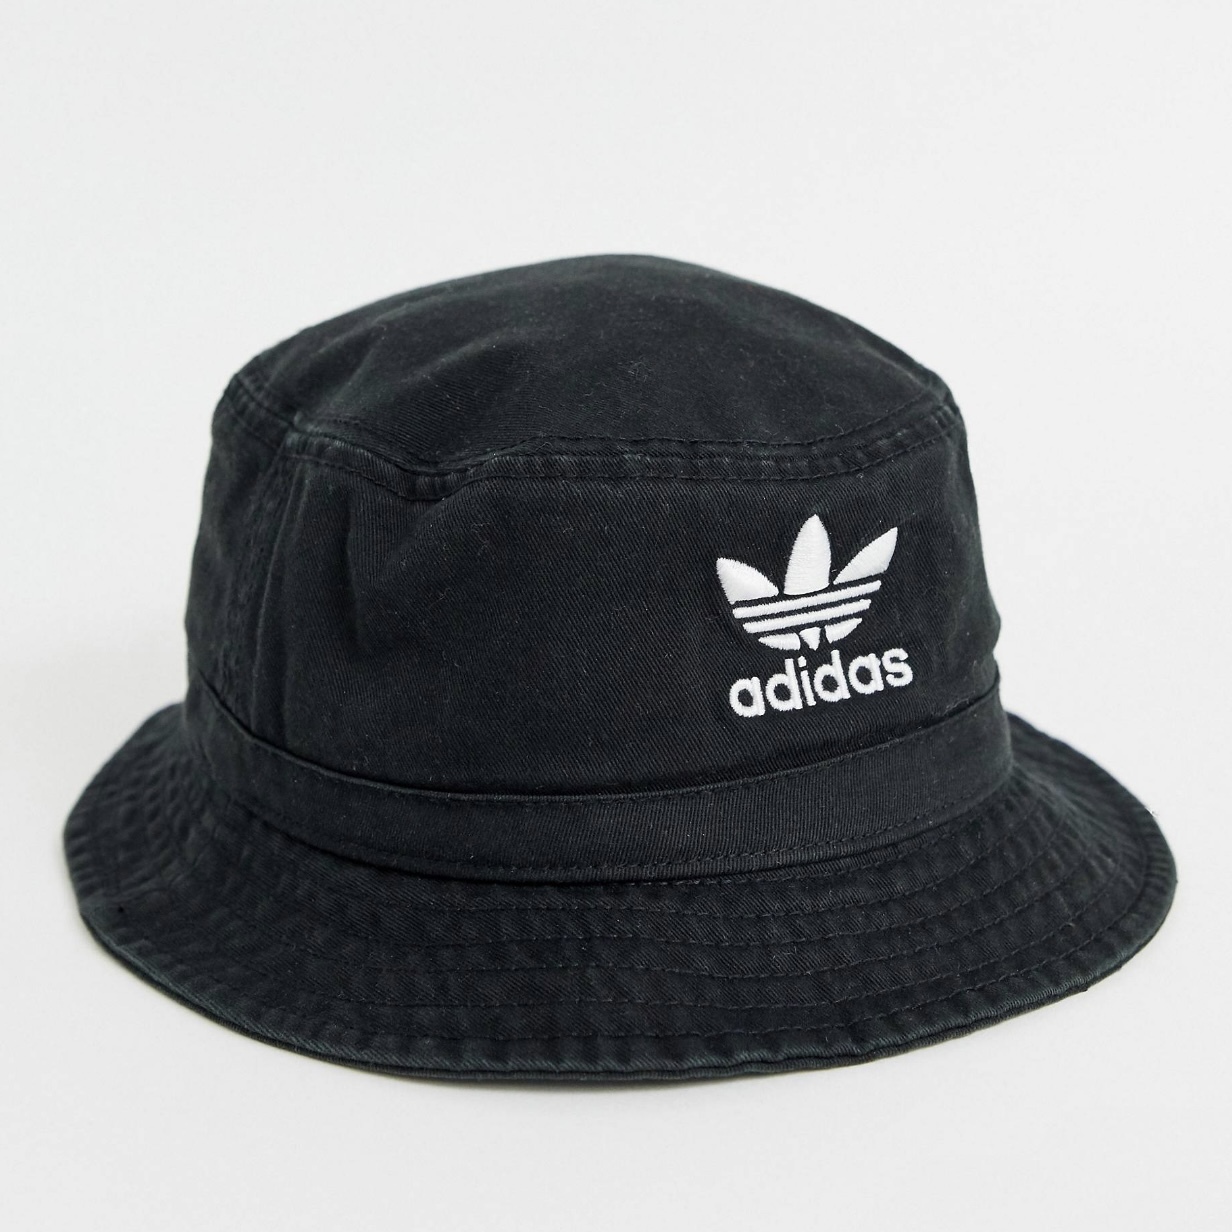 Adidas Trefoil Bucket Hat Black